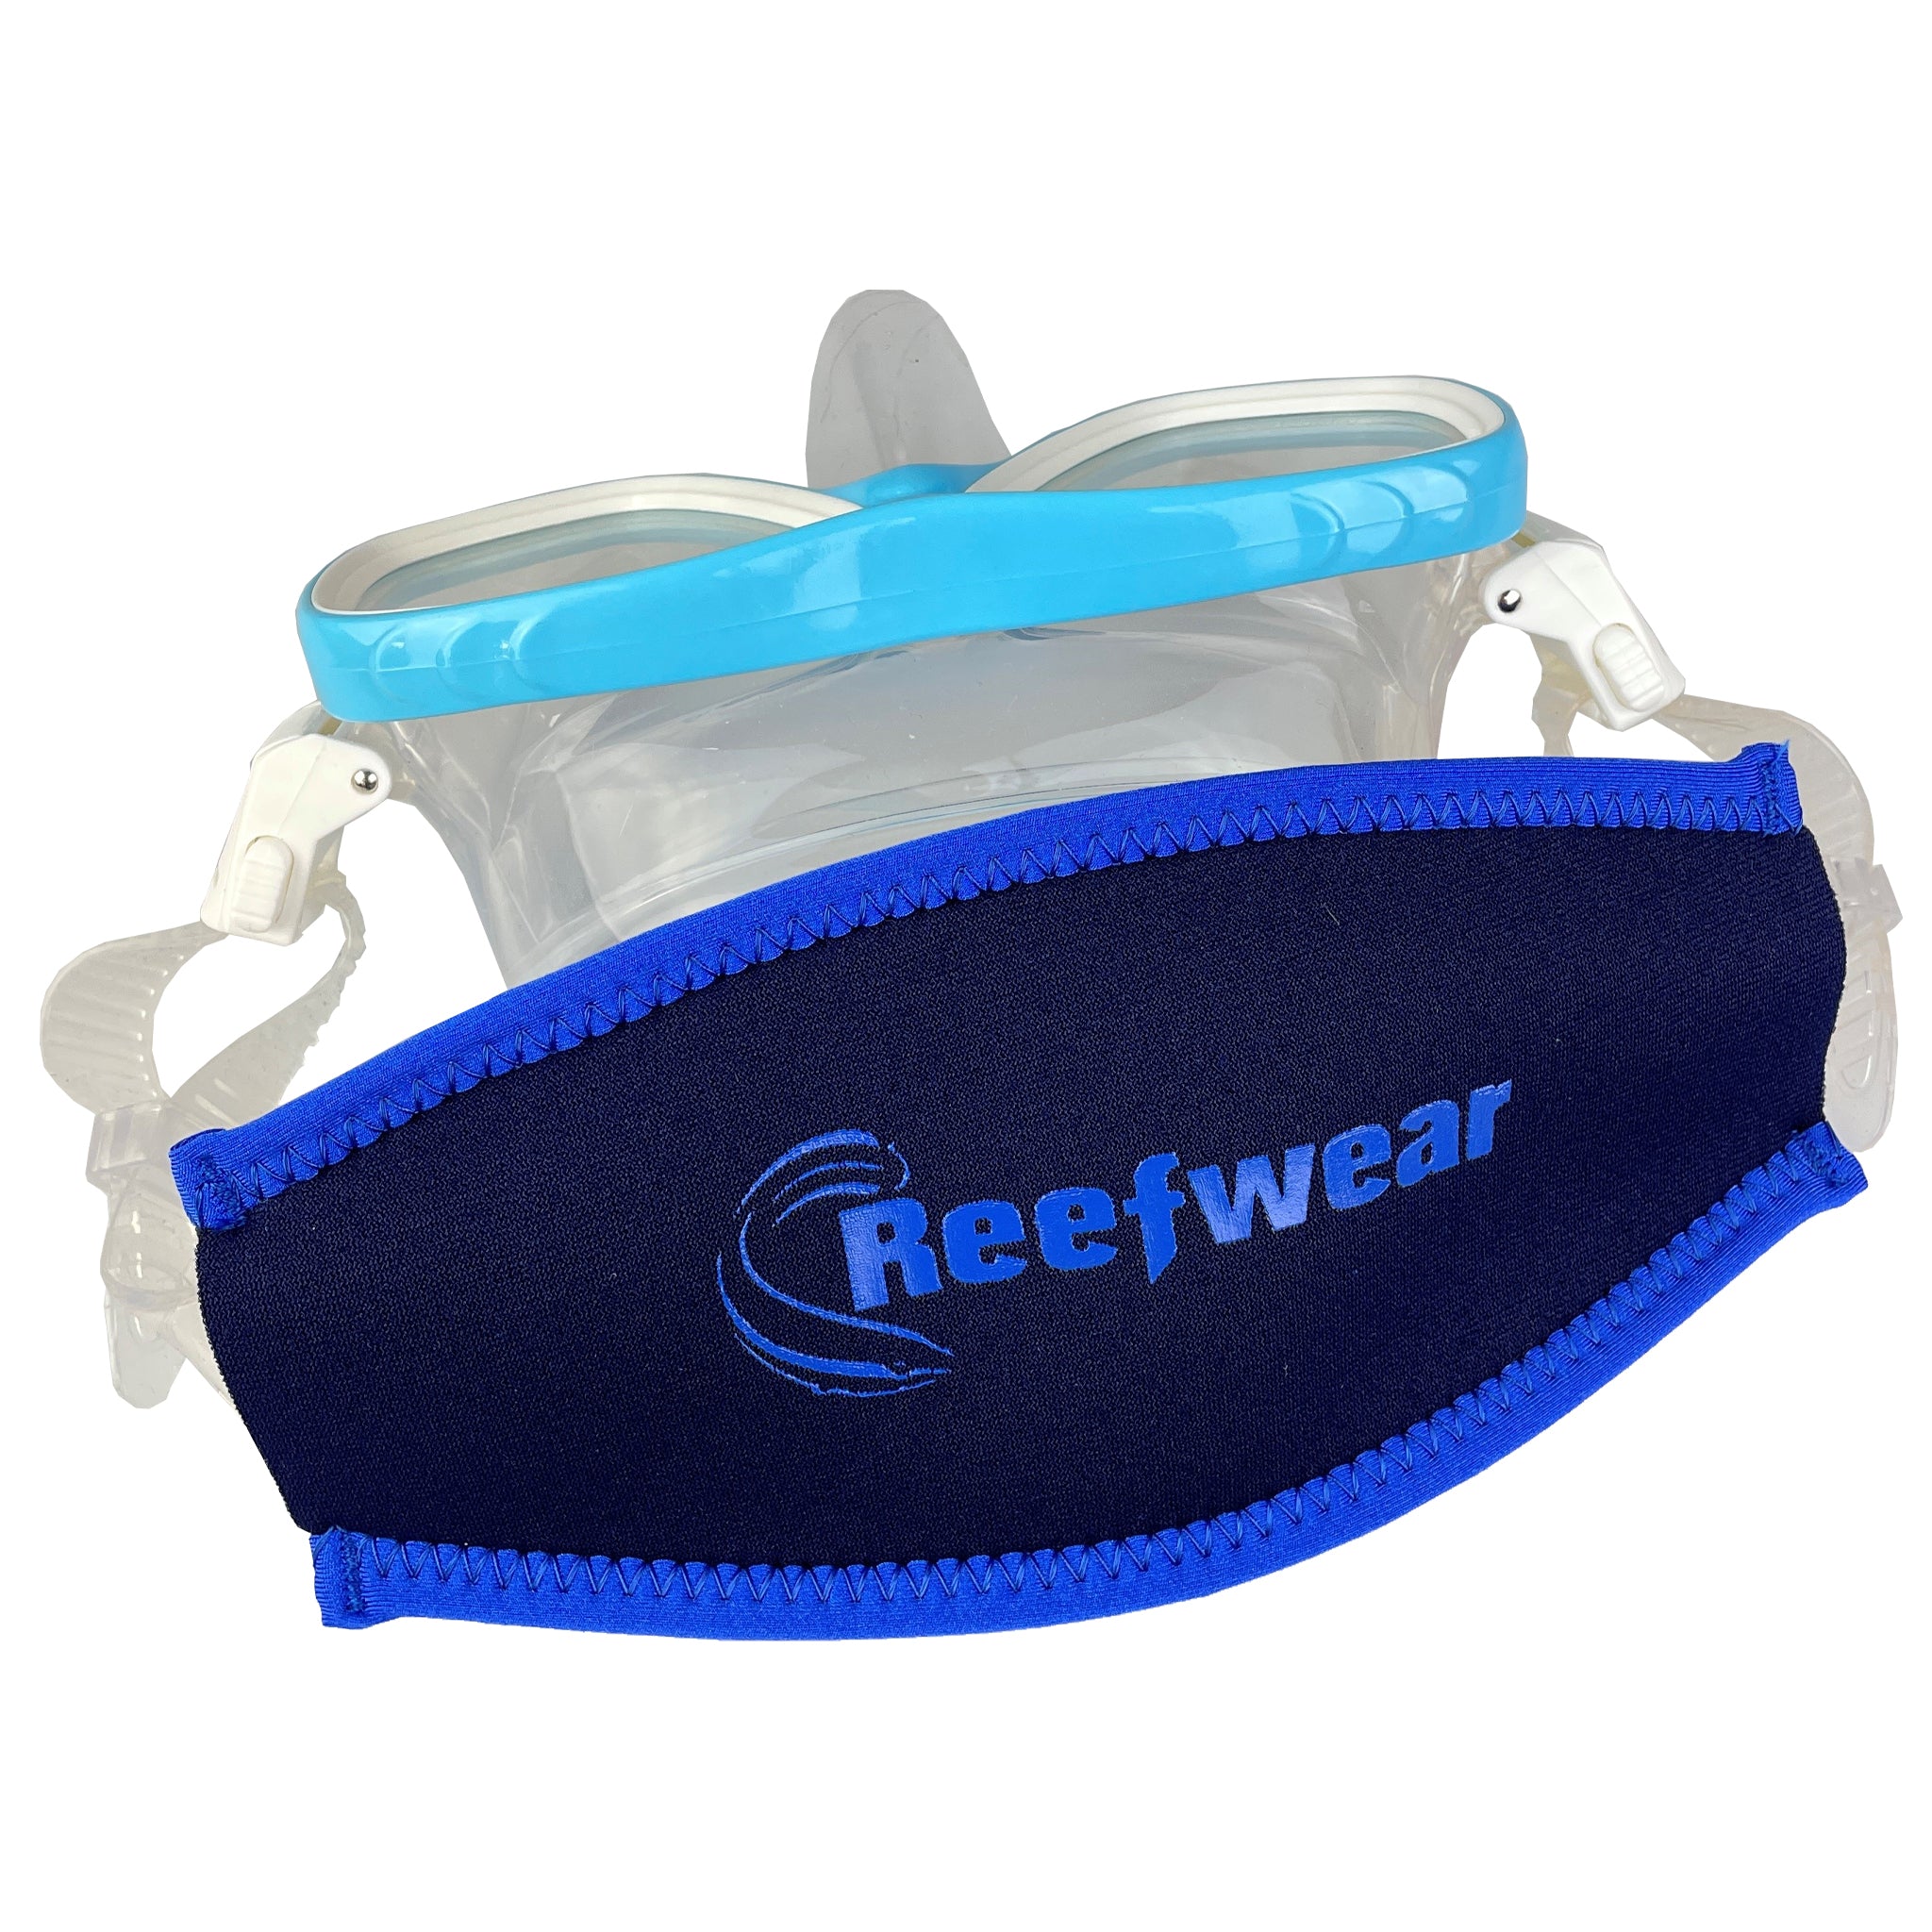 Reefwear Neoprene Mask Strap Cover | On Mask 